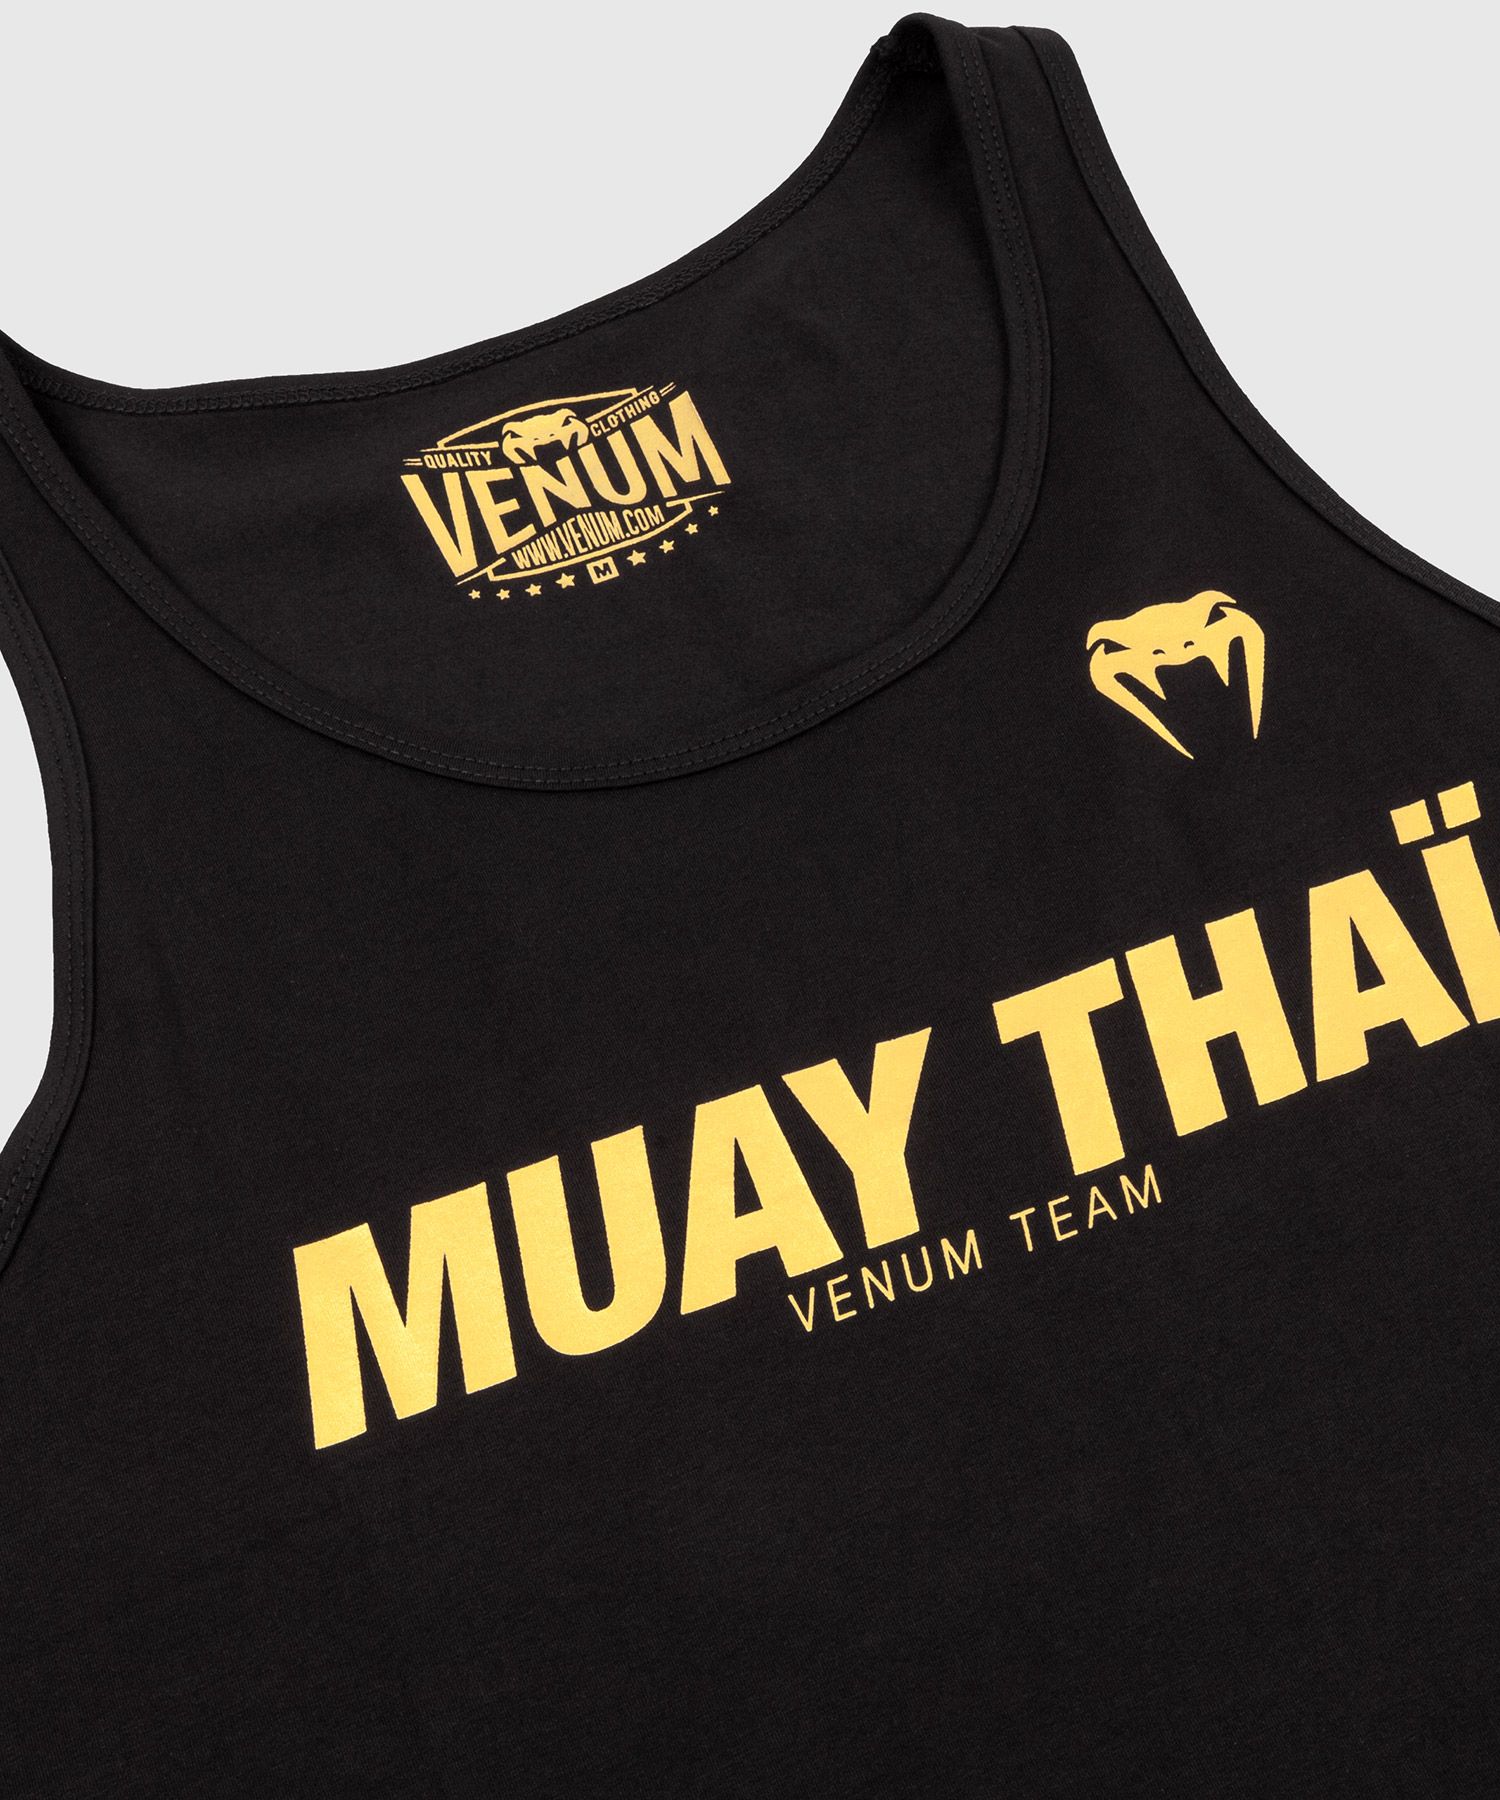 Venum Muay Thai VT Tank Top - Black/Gold